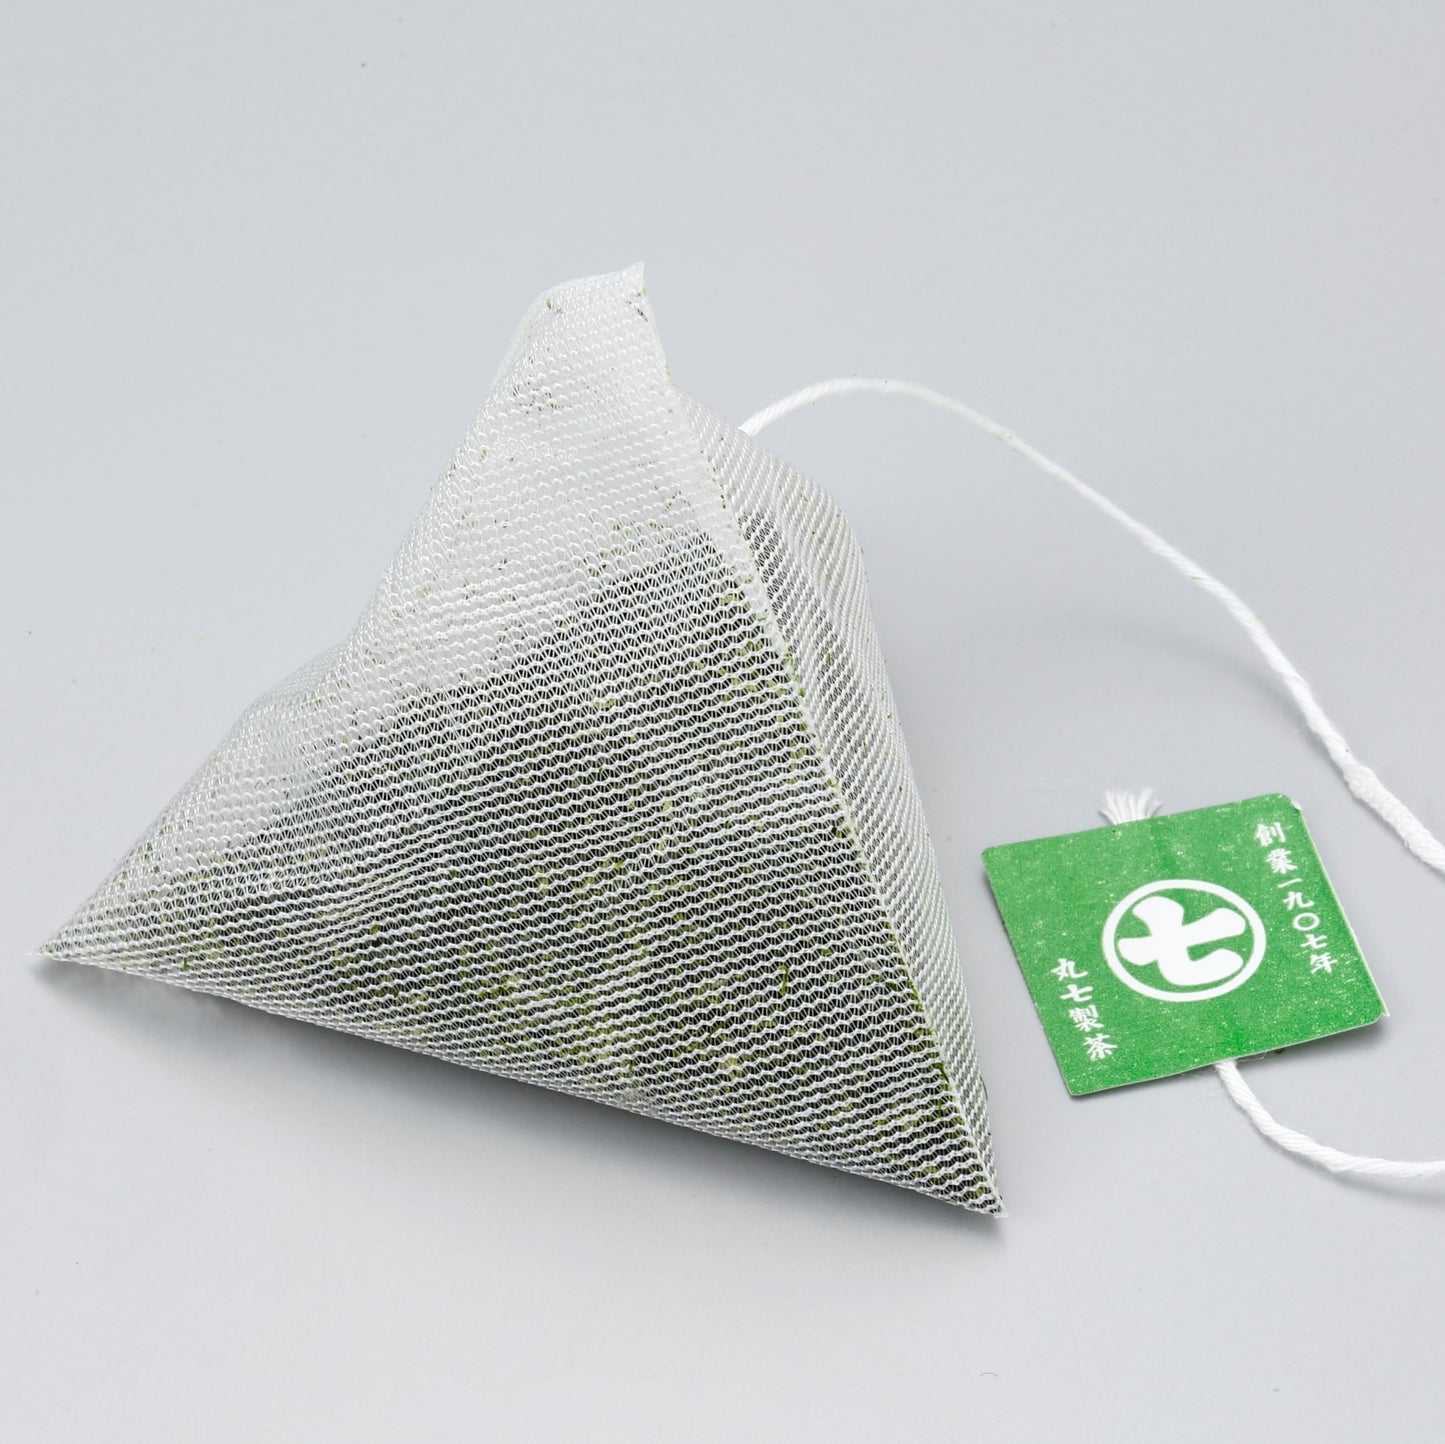 Kireicha tea bag 3g x 20 bags (box type)